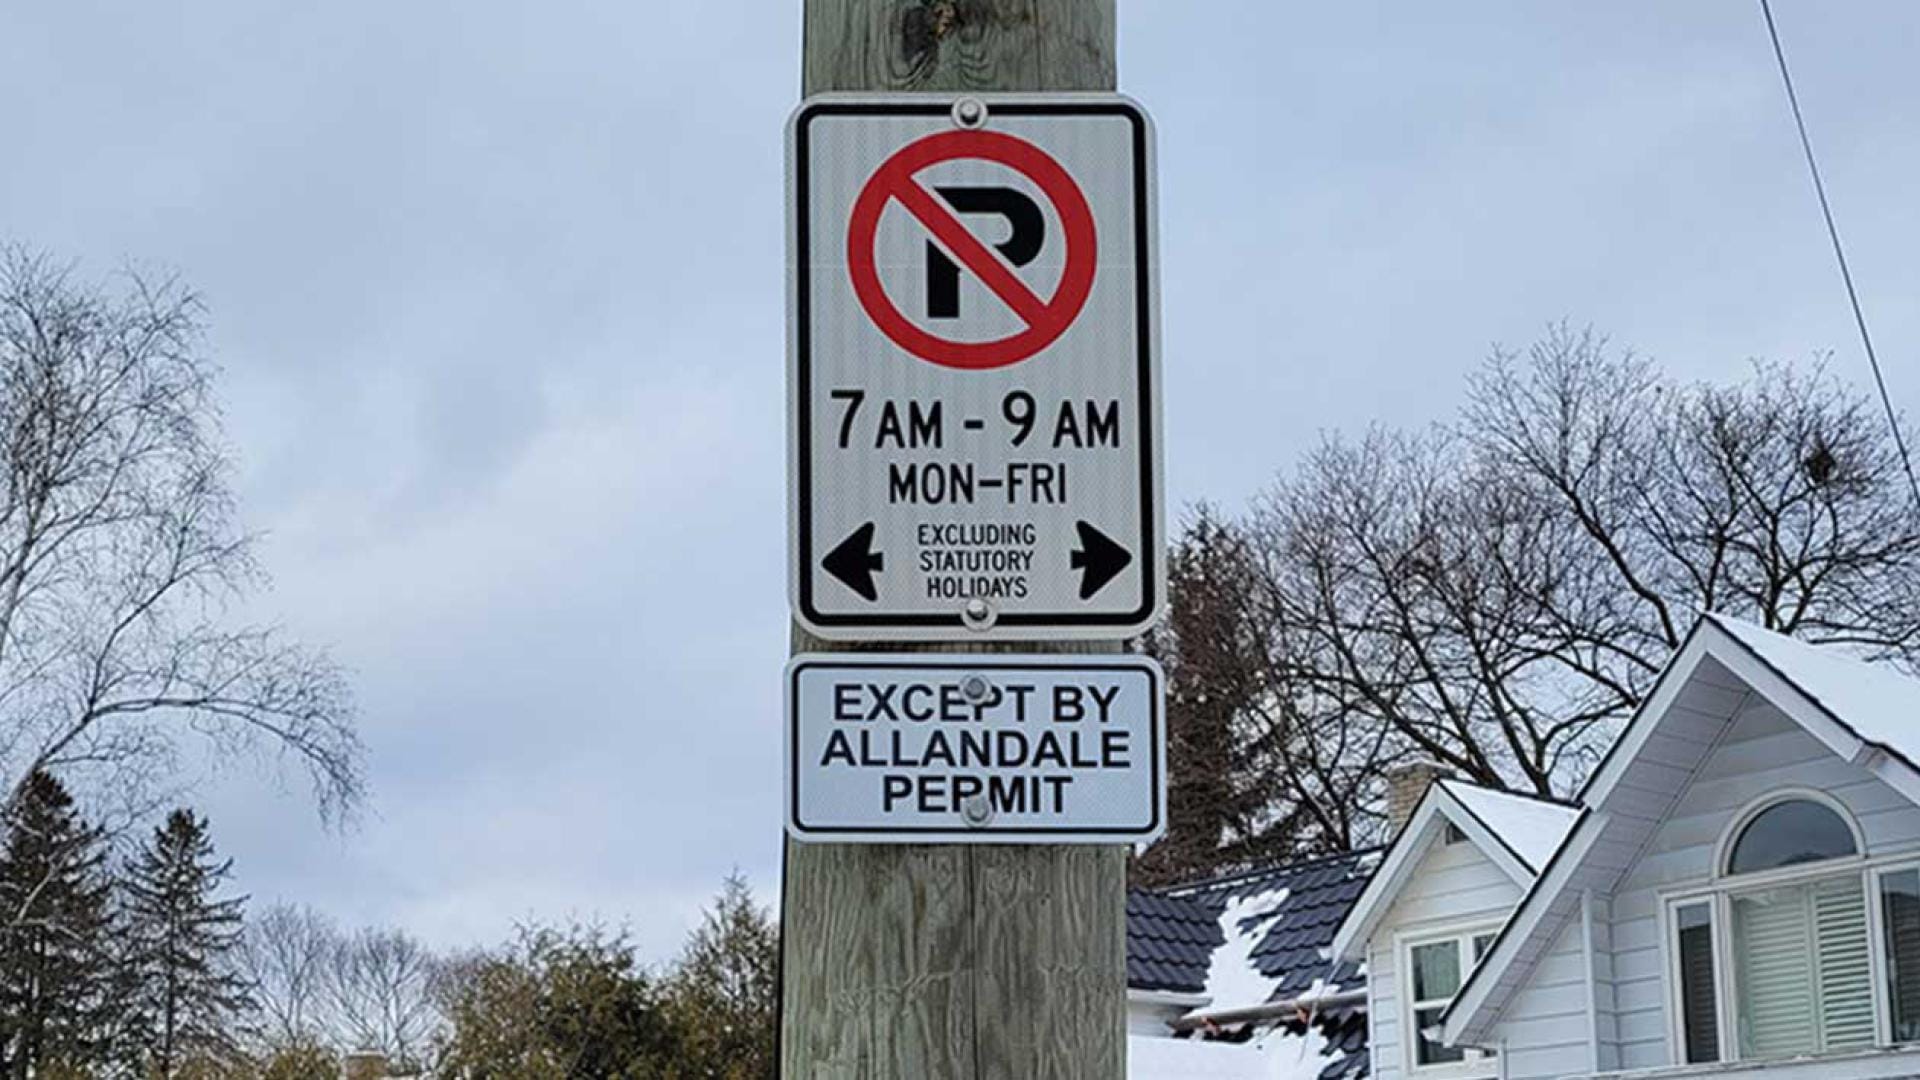 No parking except by Allandale Permit signs